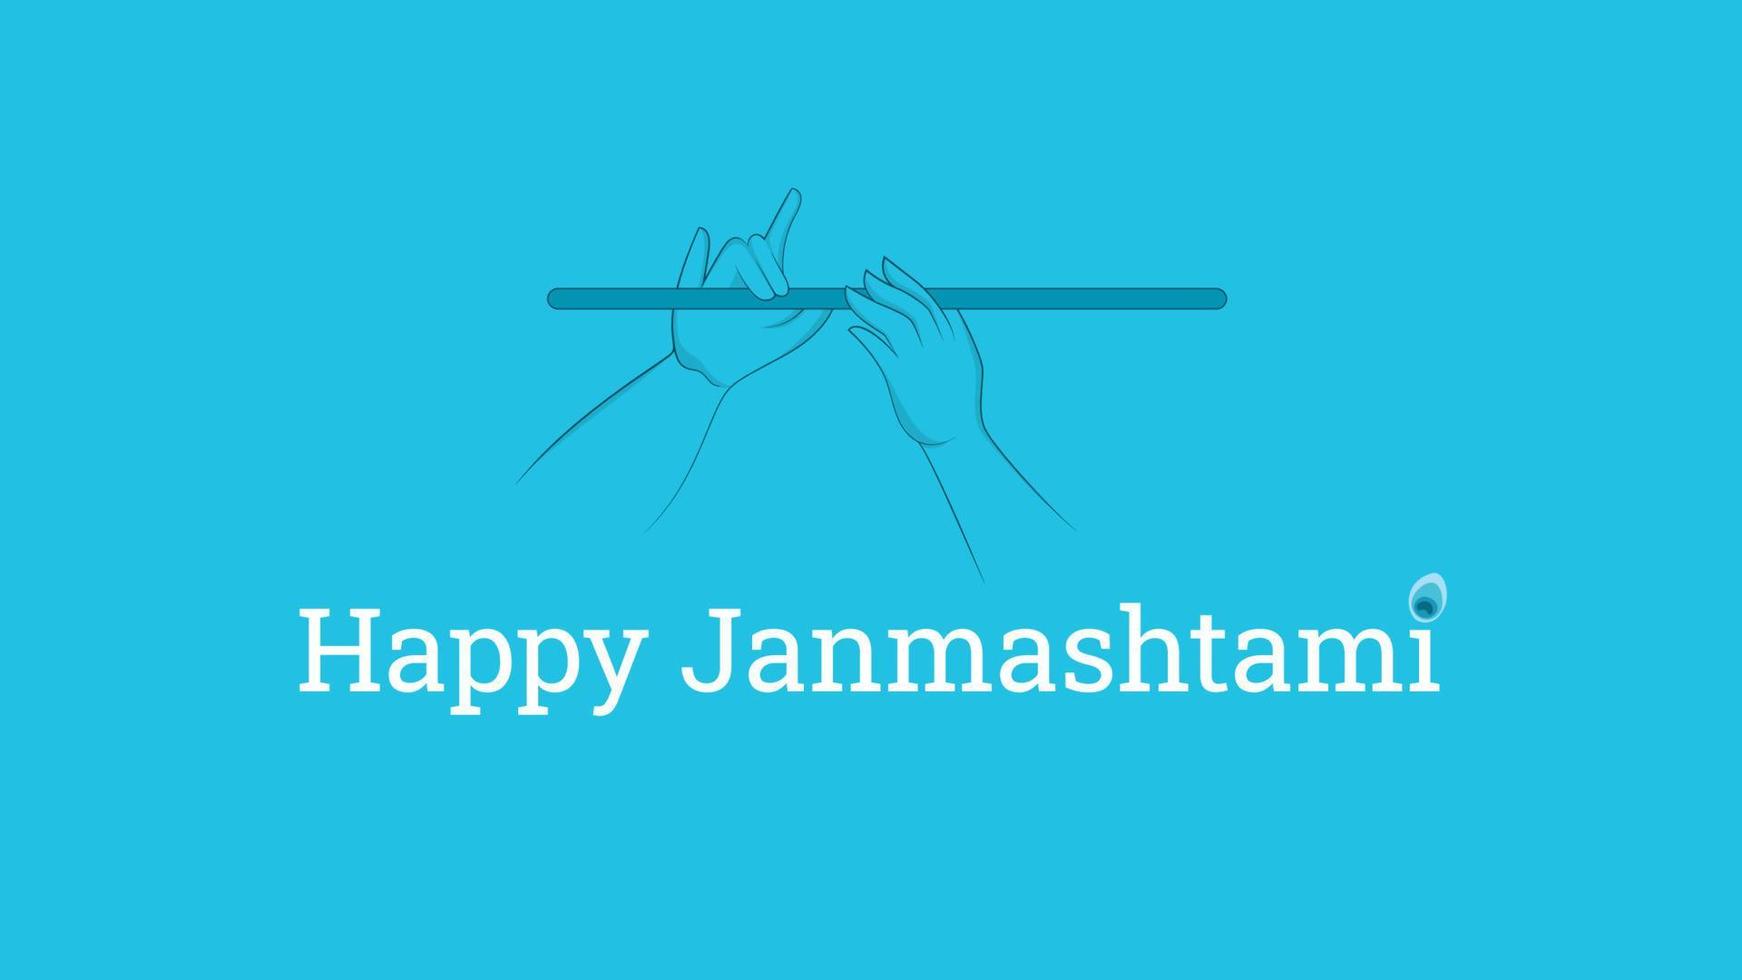 flute in hand on flat blue background. Happy Janmashtami vector illustration.